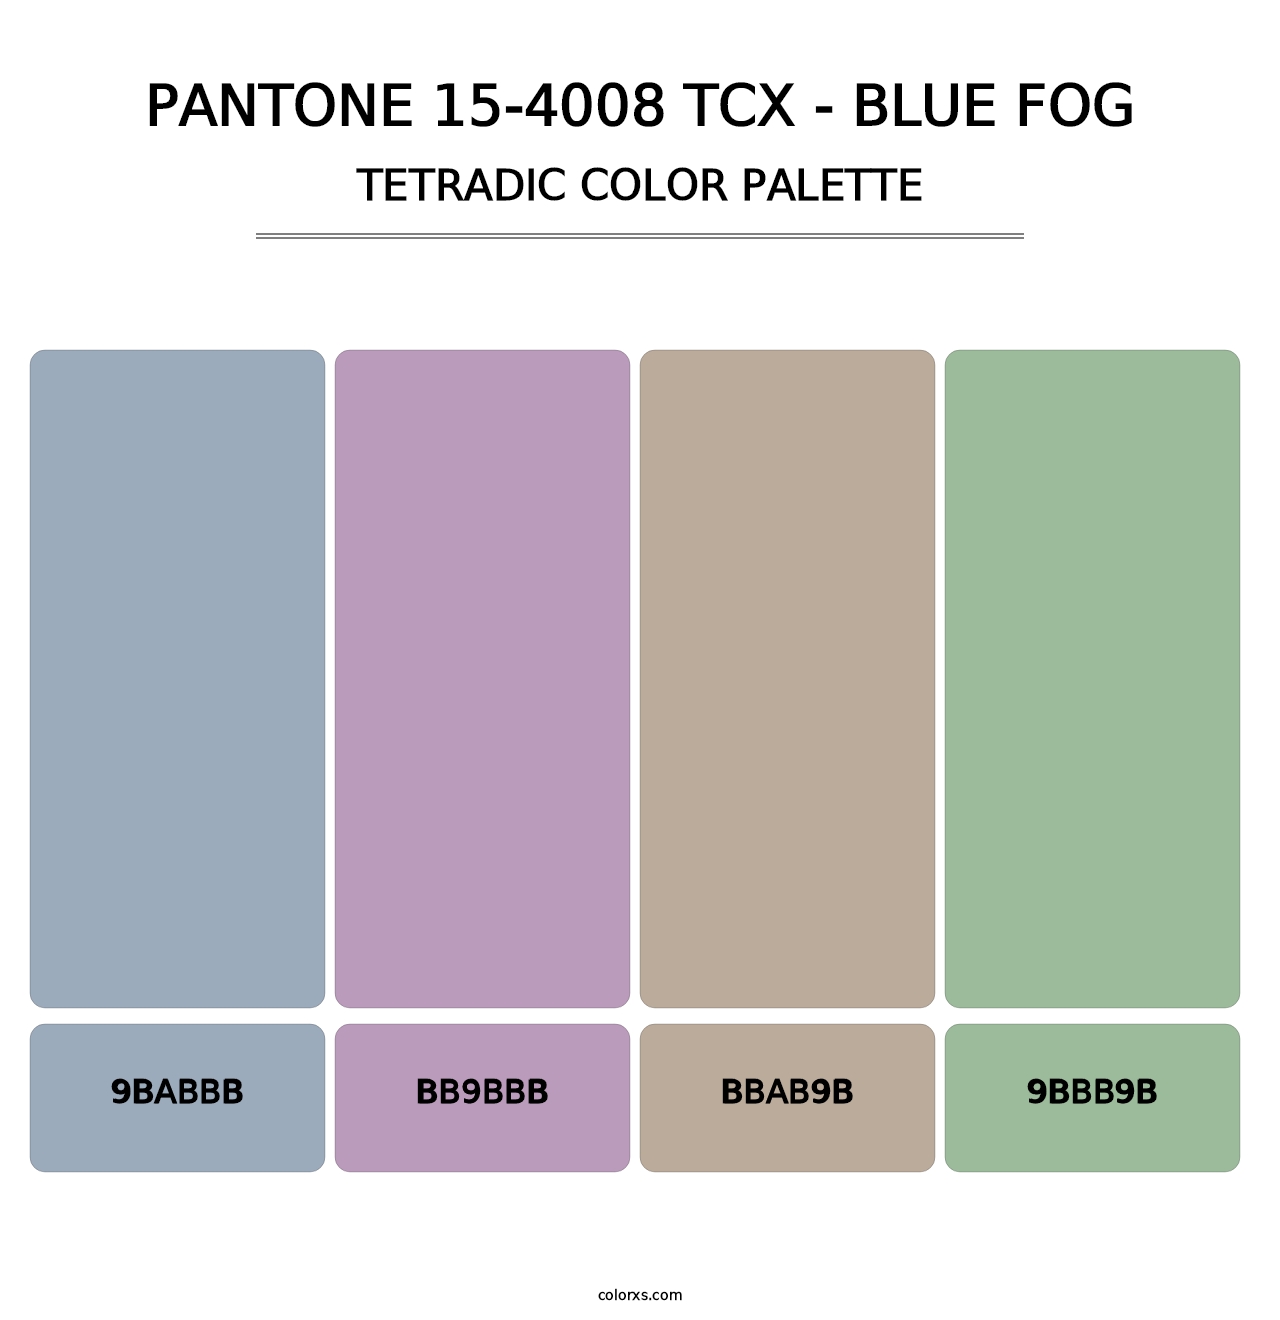 PANTONE 15-4008 TCX - Blue Fog - Tetradic Color Palette